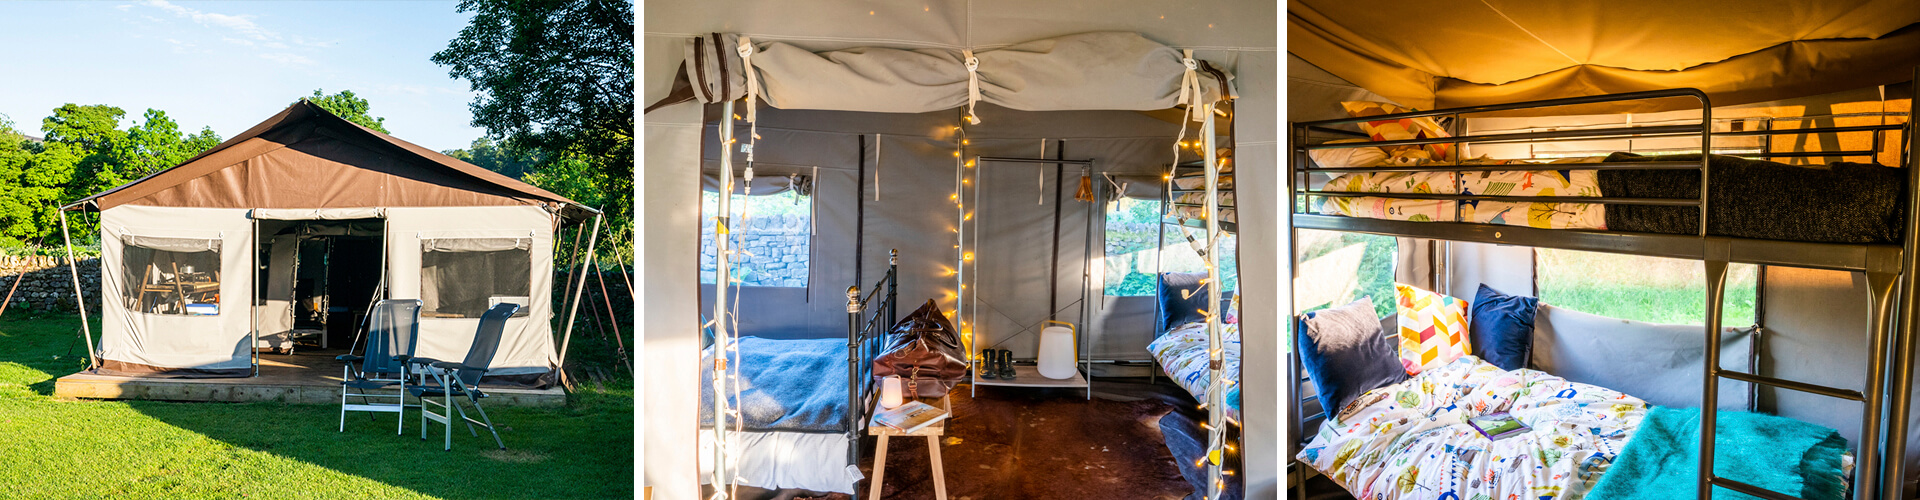 Masons Campsite Safari Tent